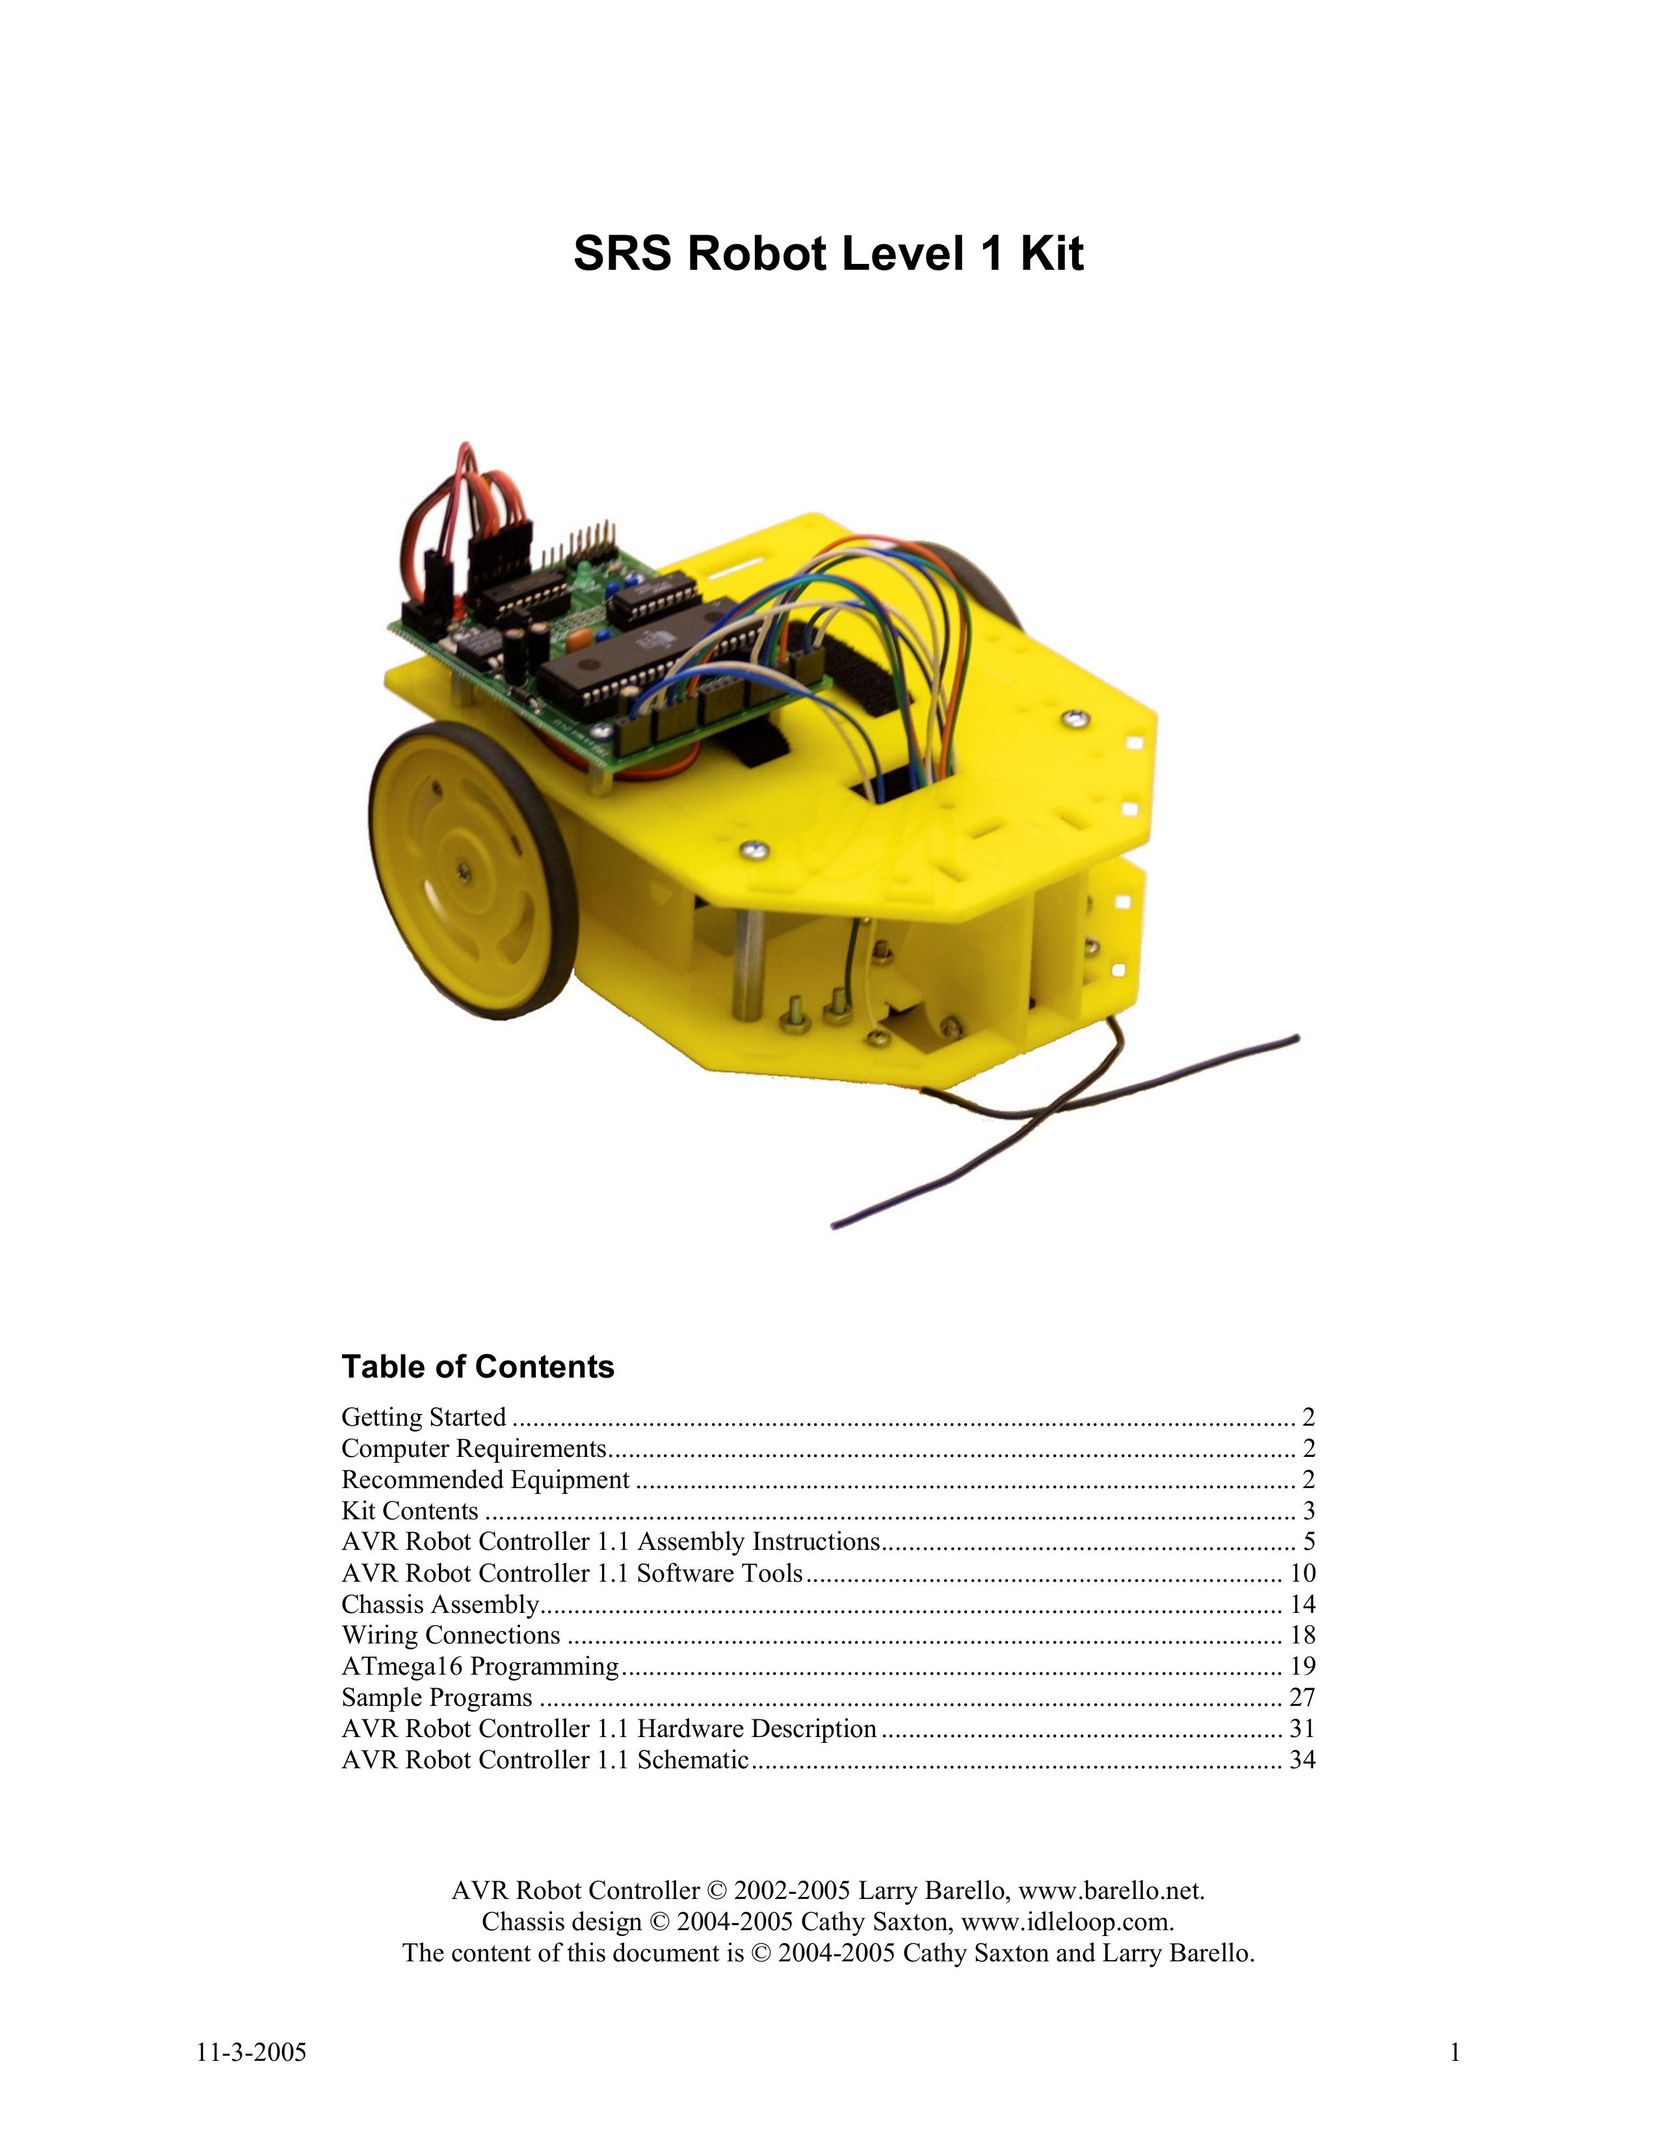 SRS Labs SRS Robot Level 1 Kit Robotics User Manual